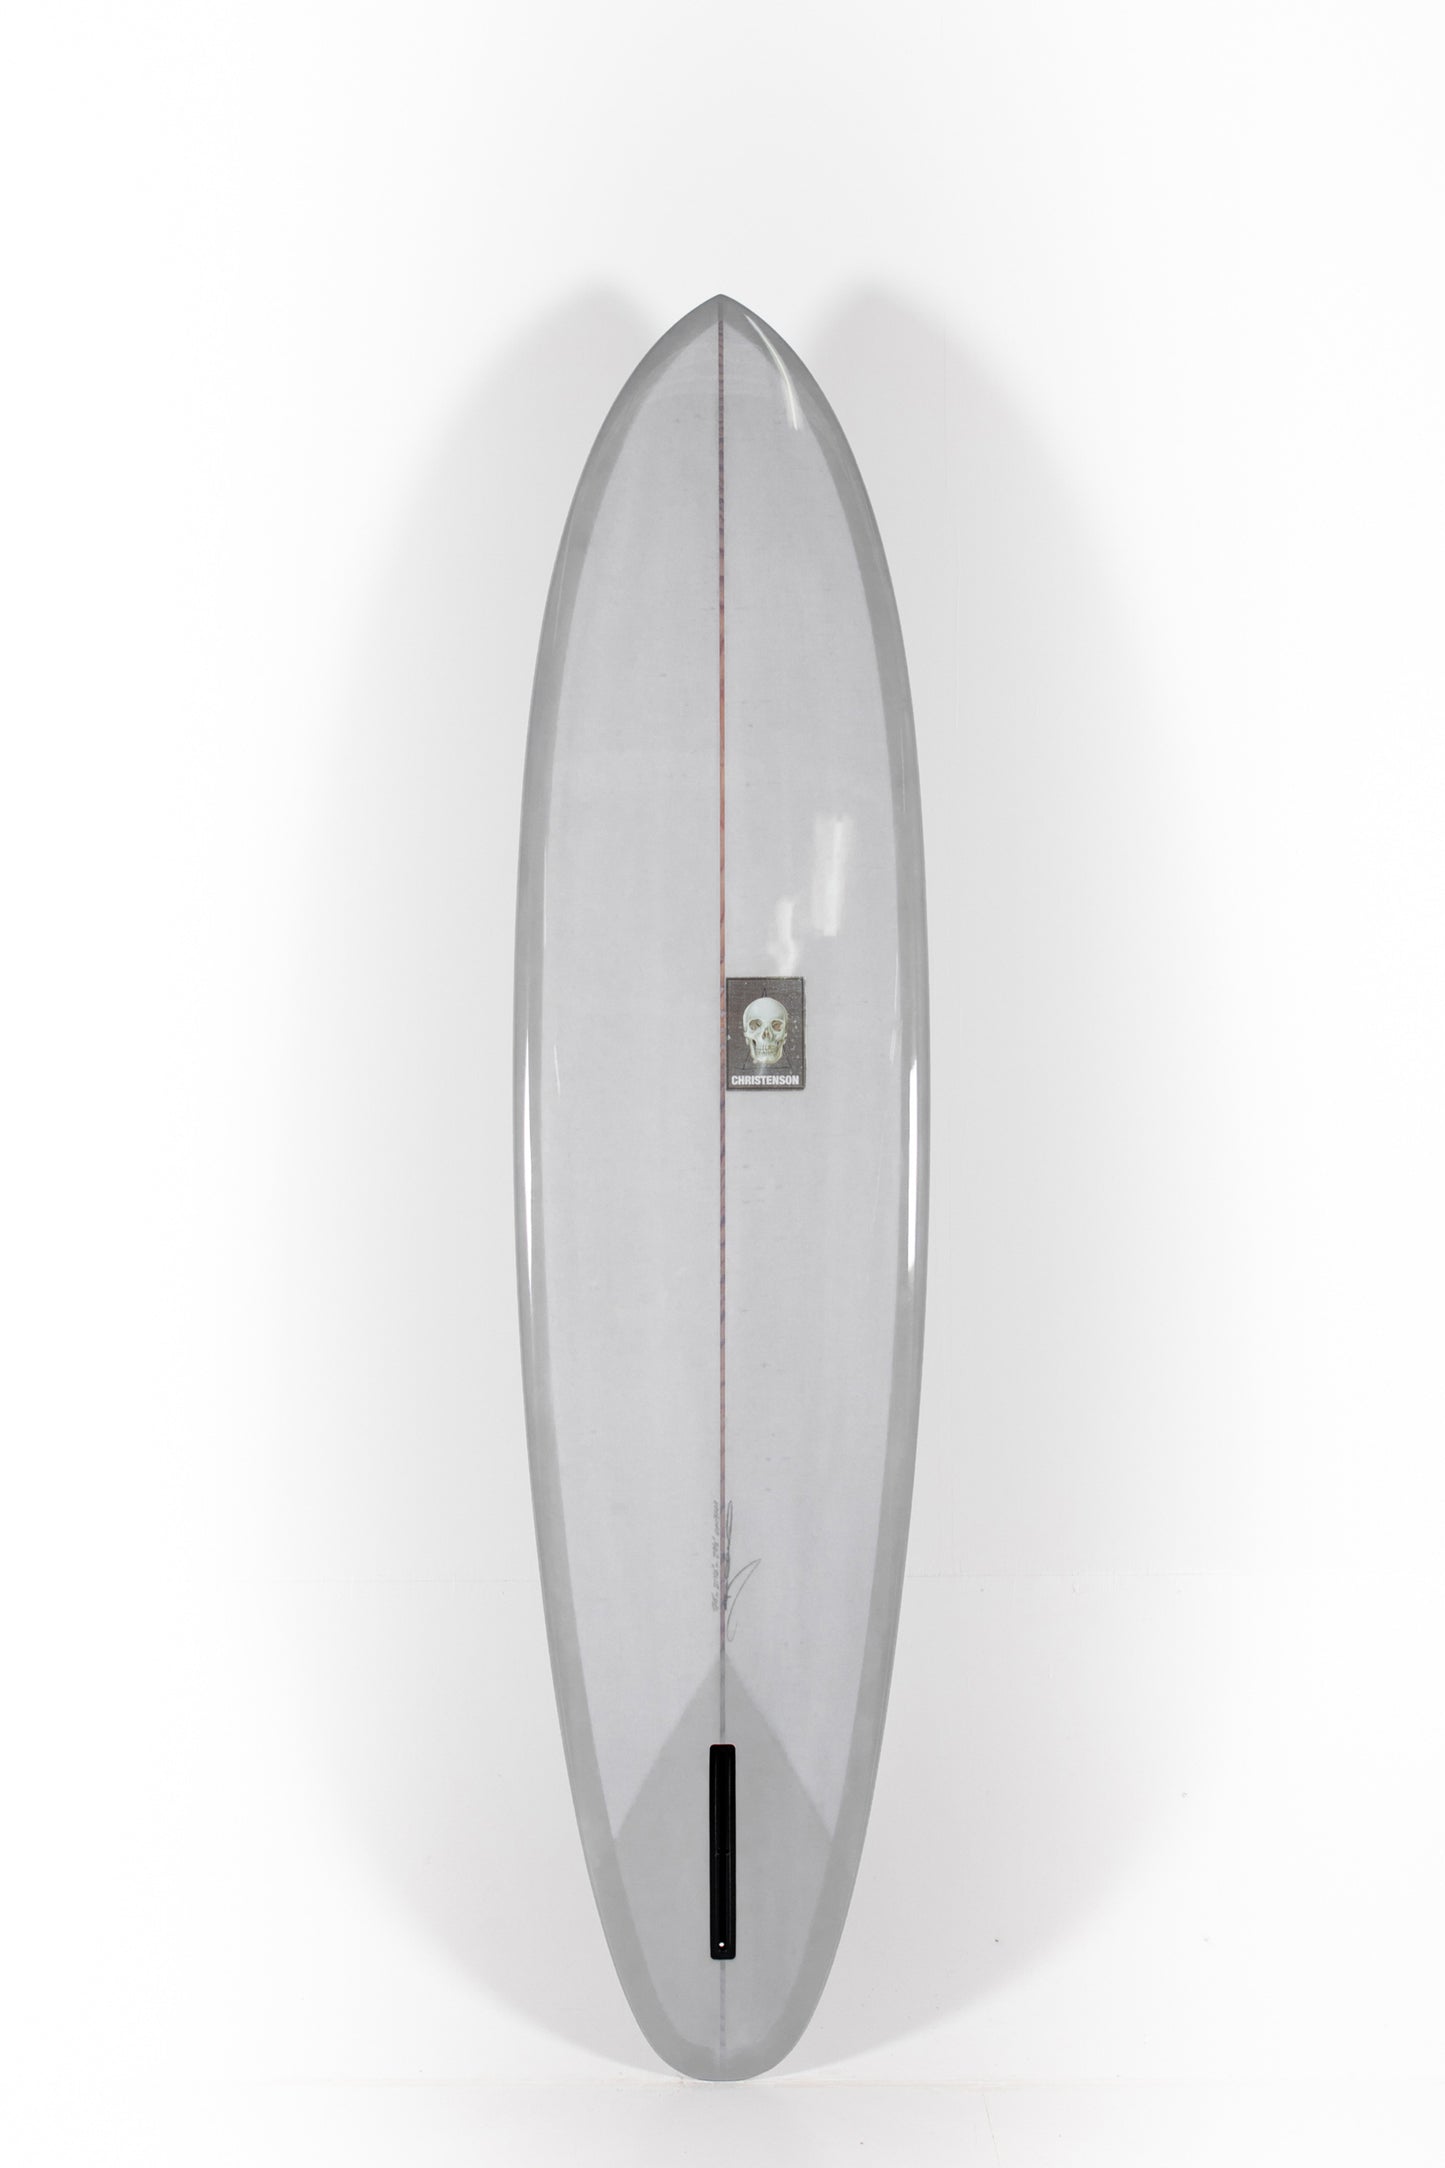 Christenson Surfboards - FLAT TRACKER 2.0 - 7'8